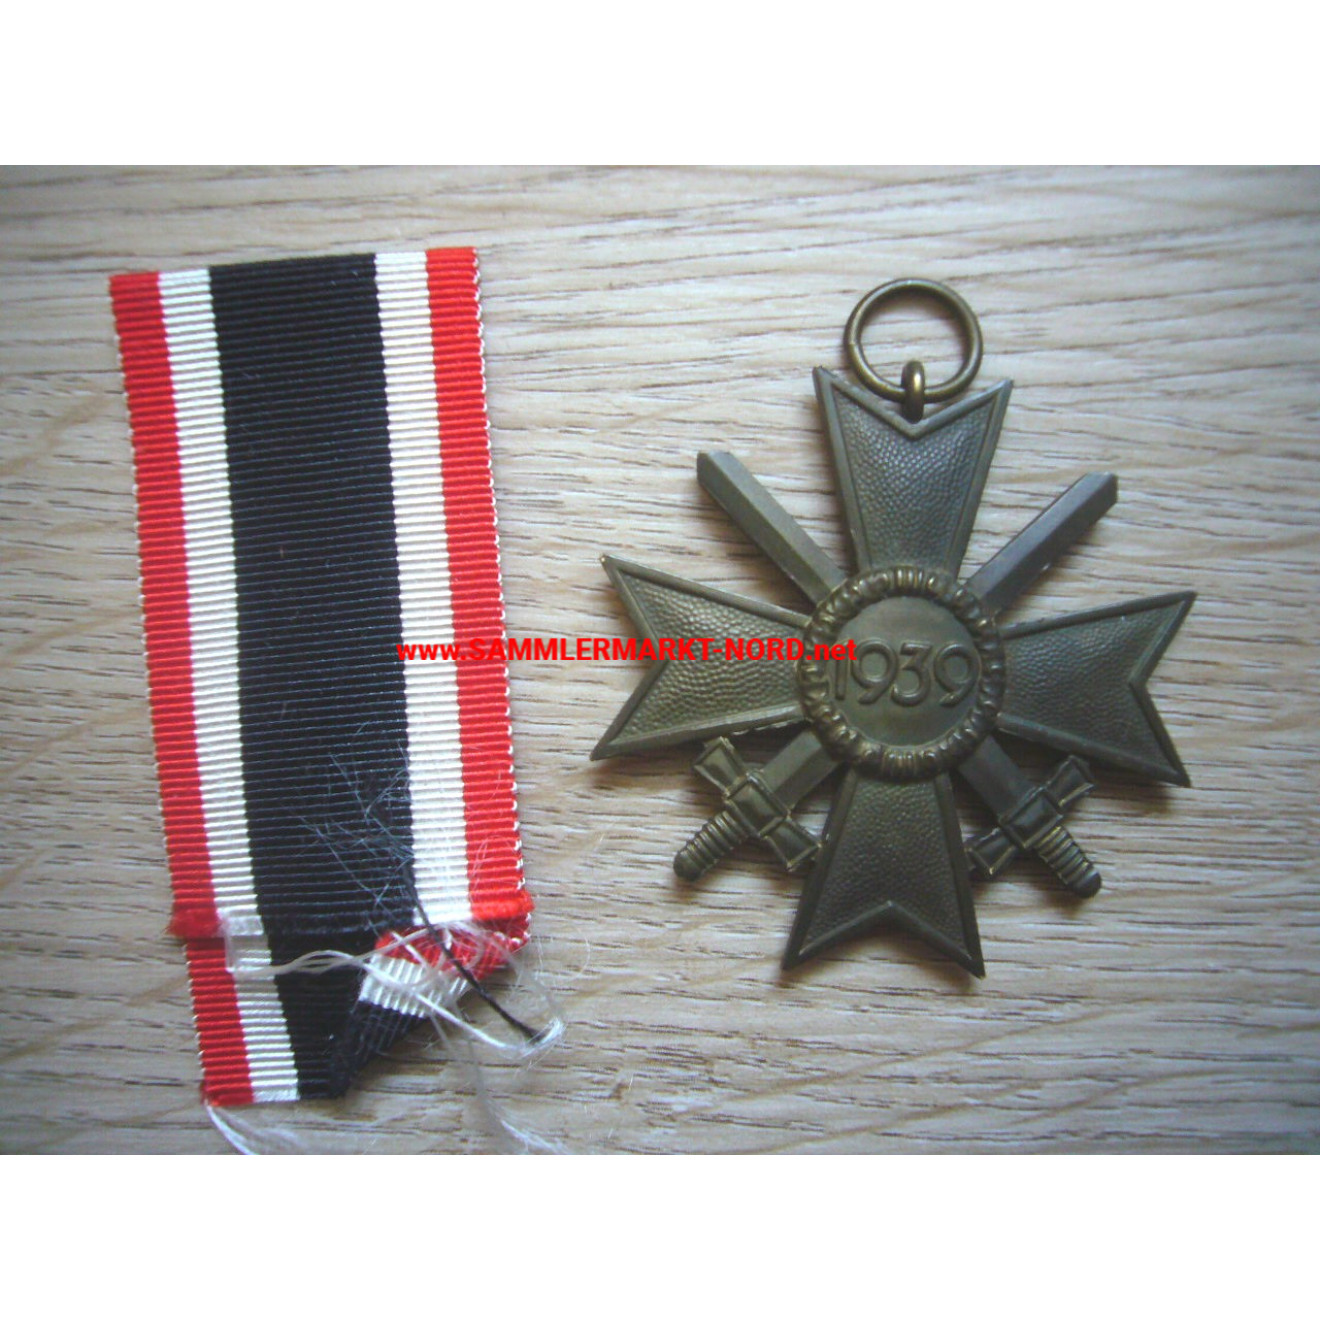 Kriegsverdienstkreuz 2. Klasse mit Schwerter - Buntmetall